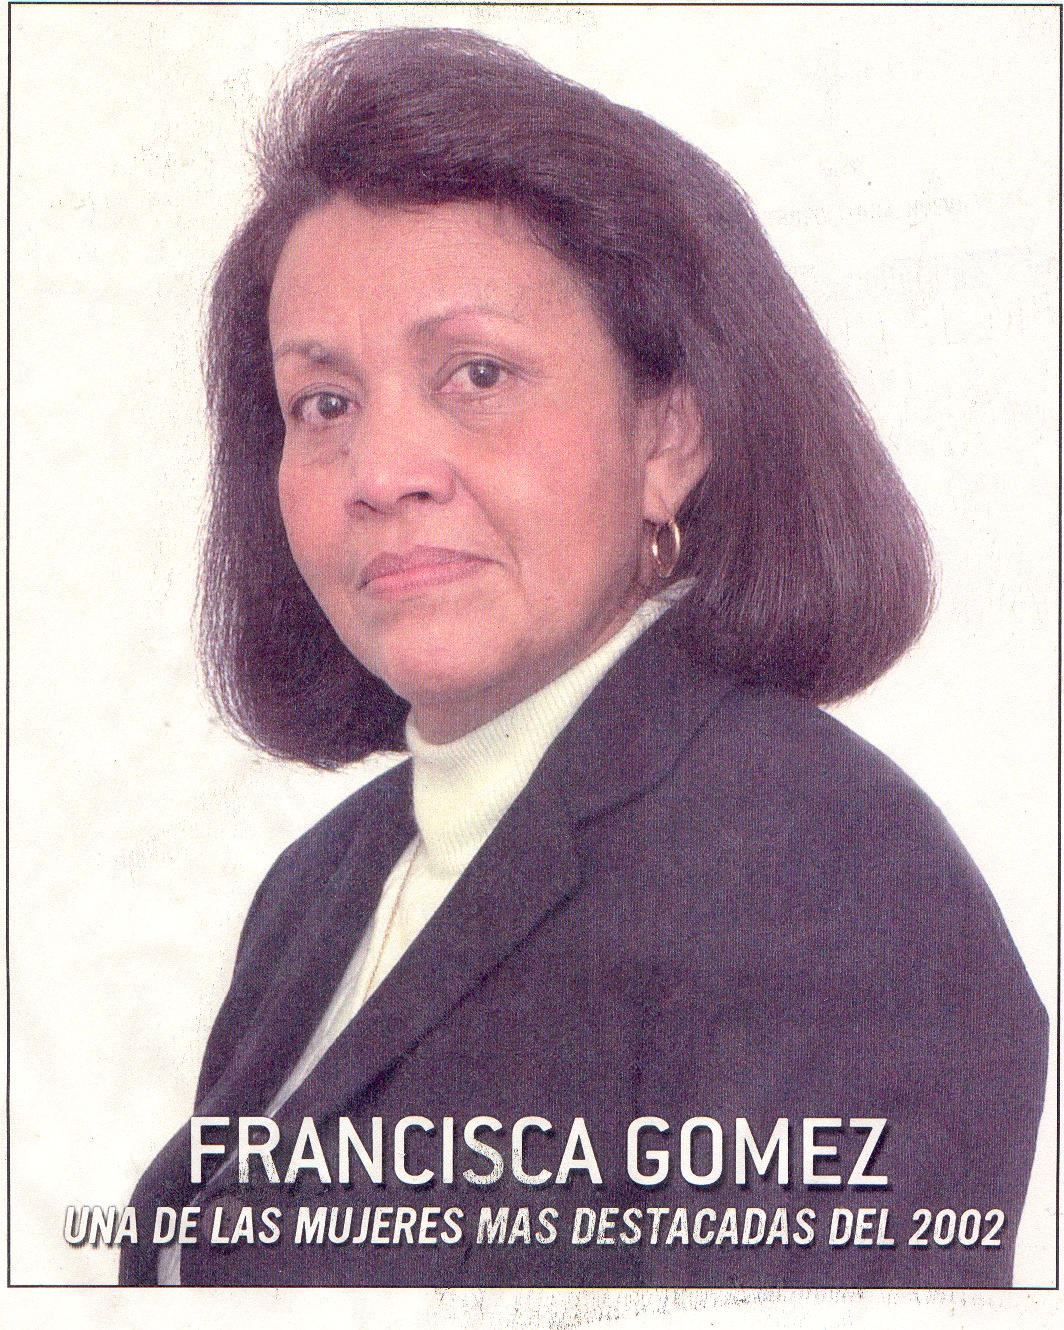 Mujer latina del año 2002.